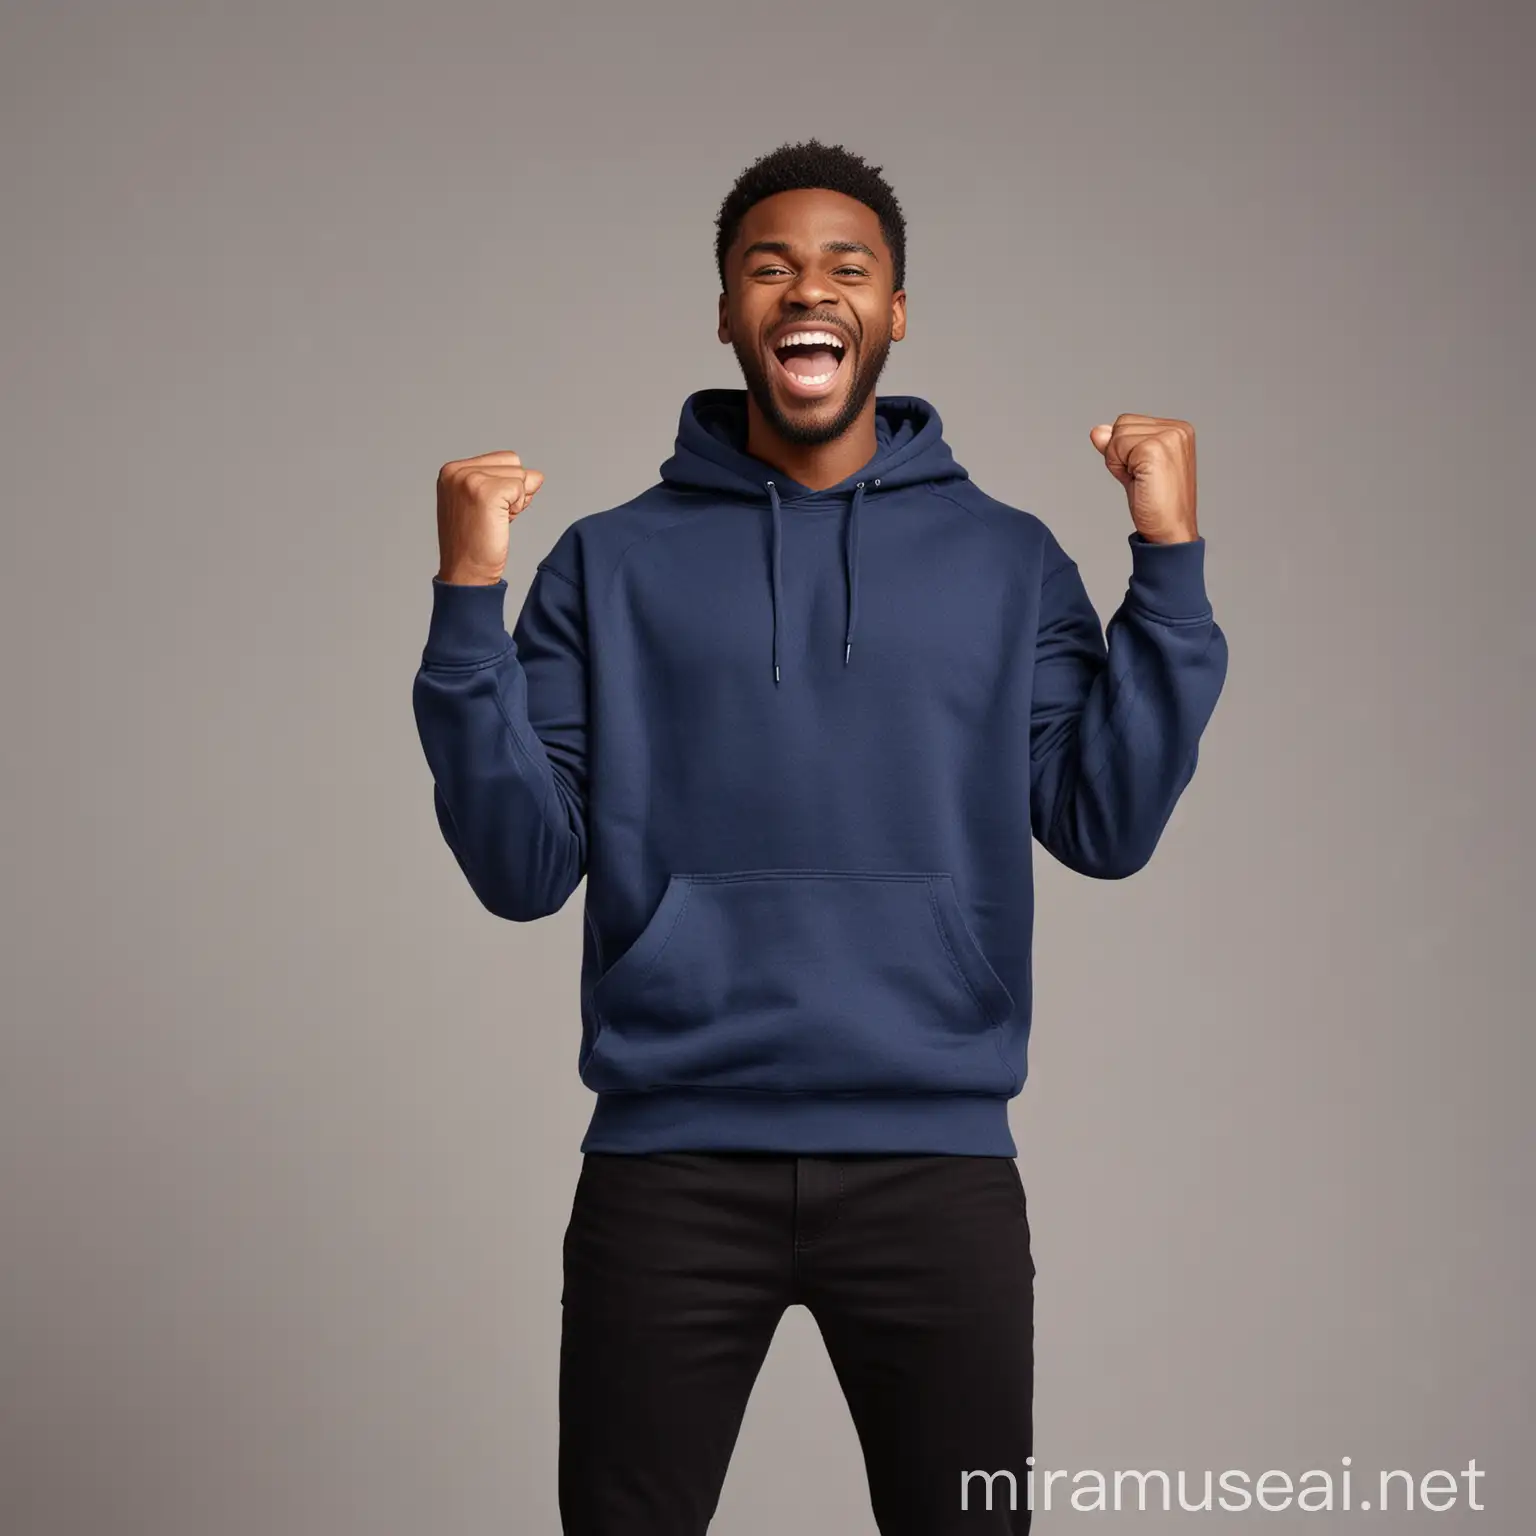 Energetic African Man Celebrating Victory in Stylish Blue Sweatshirt